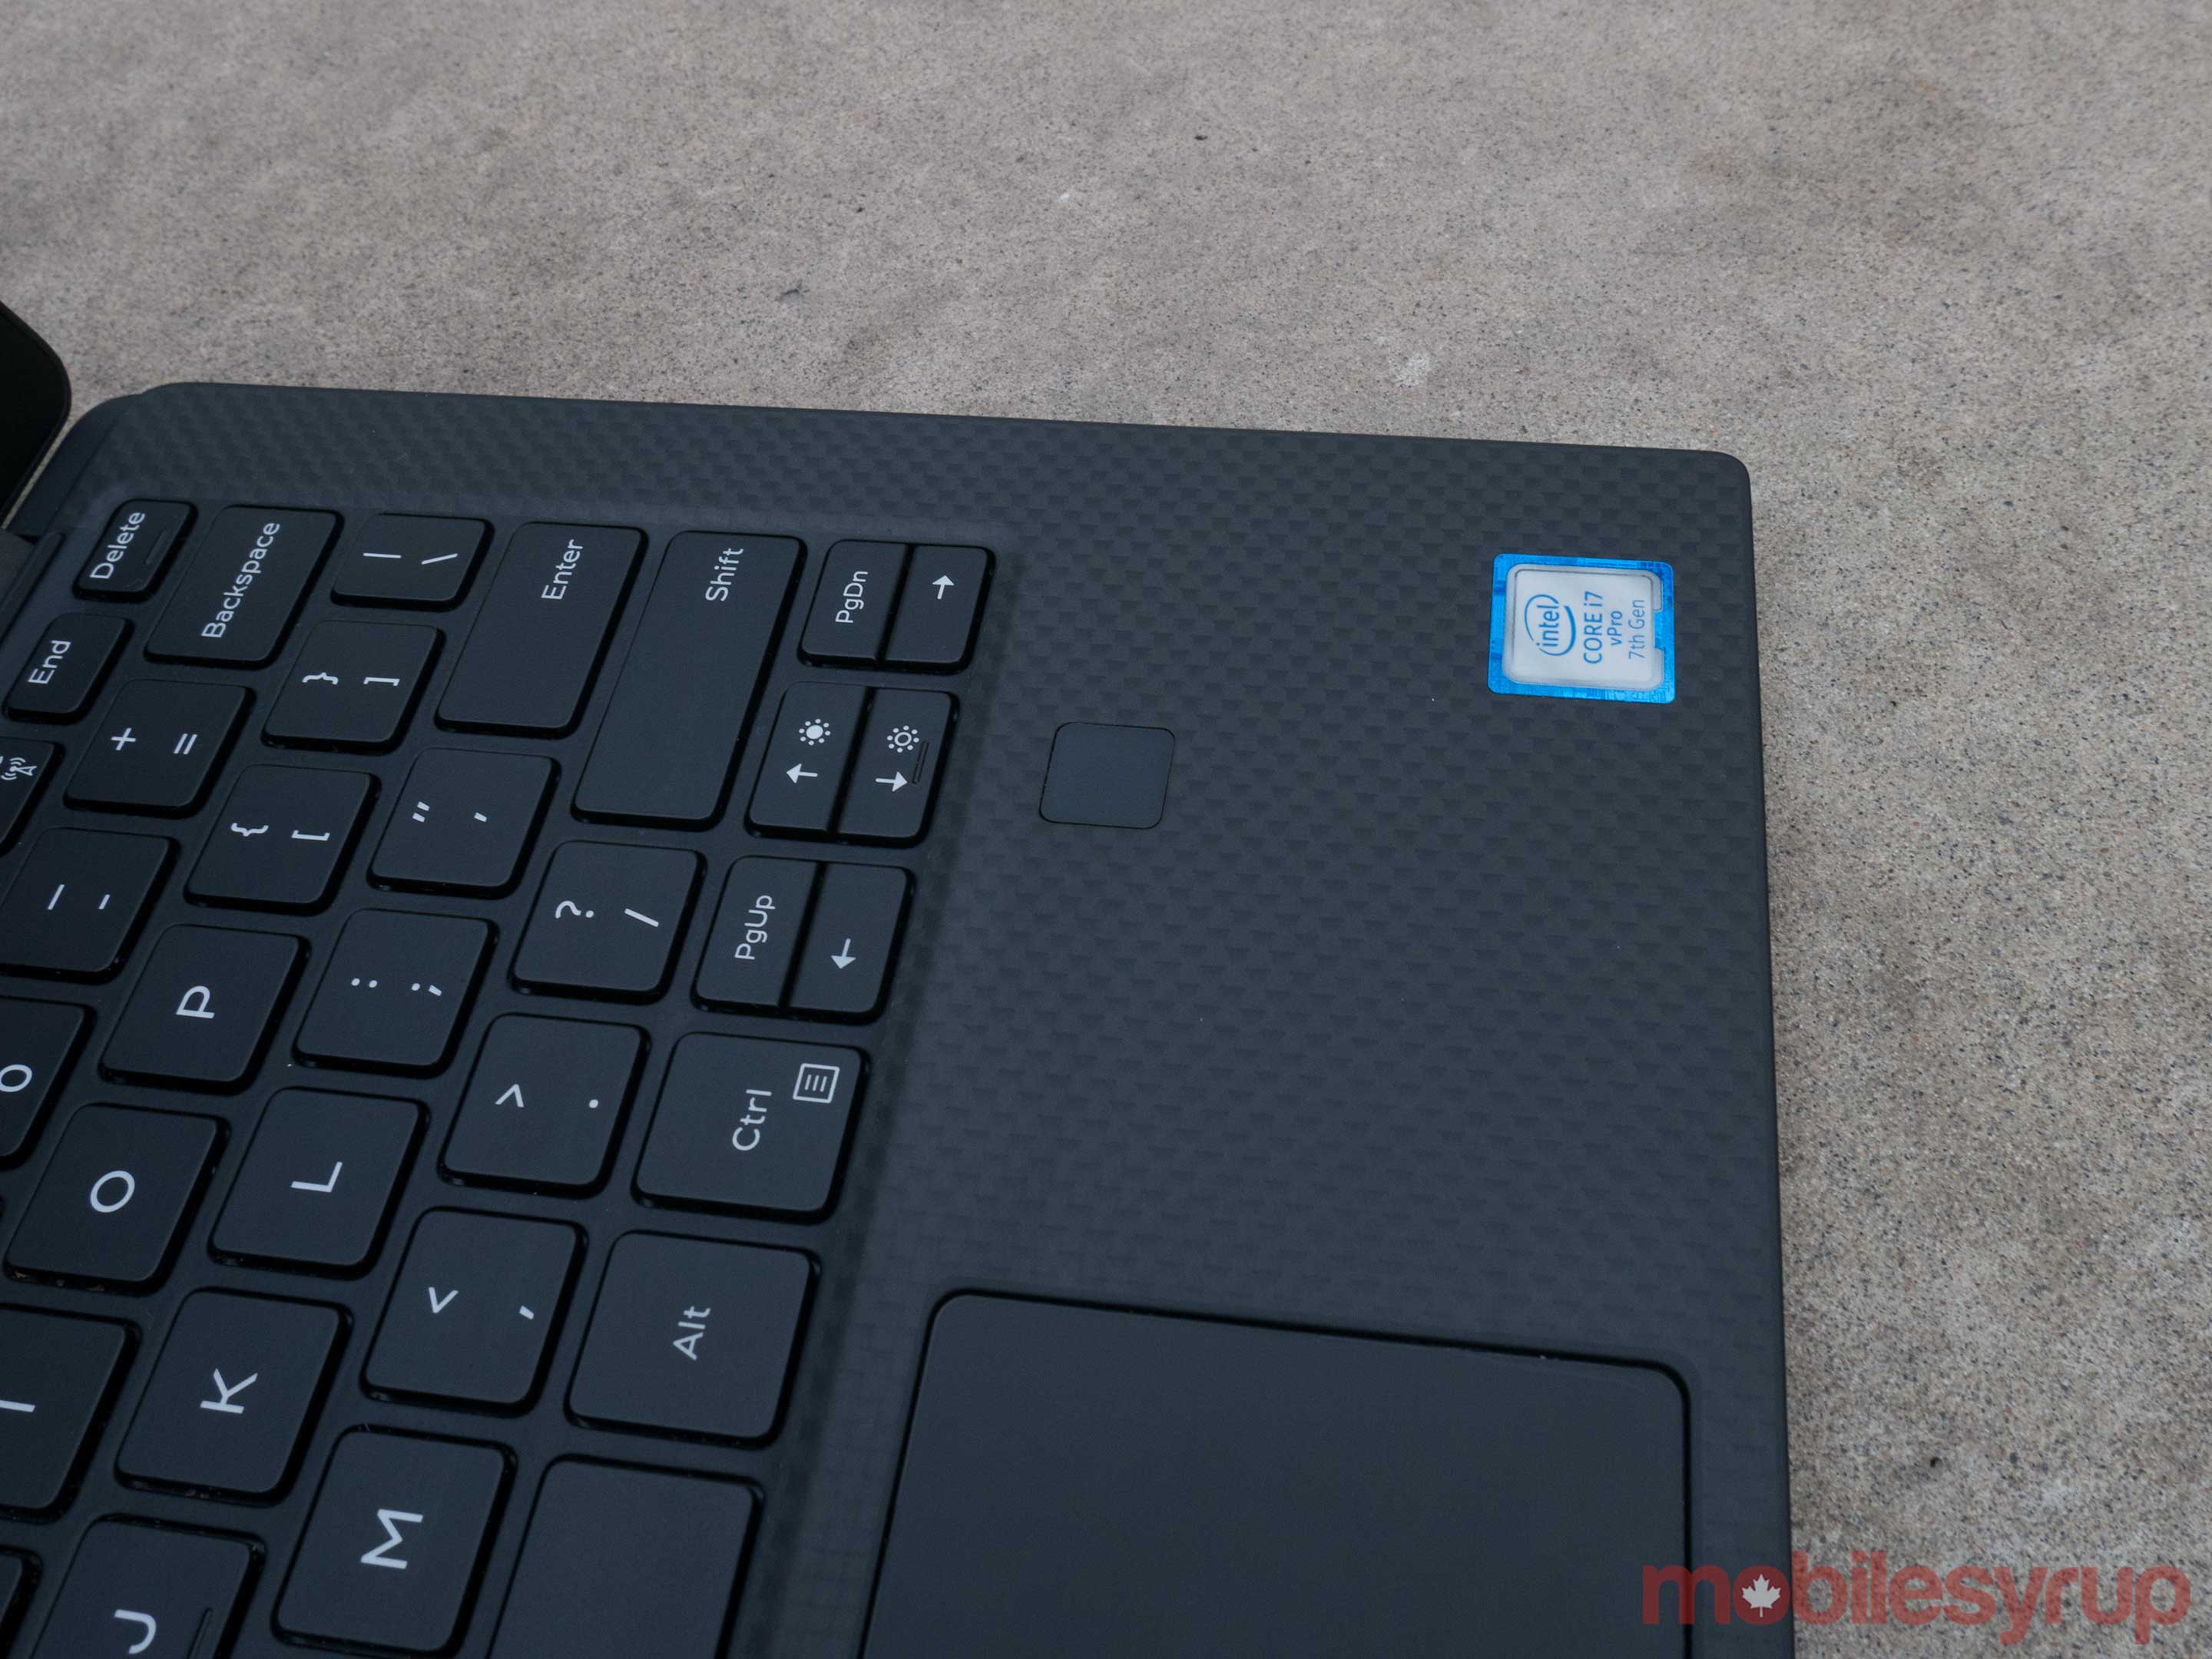 Dell XPS 13 fingerprint sensor